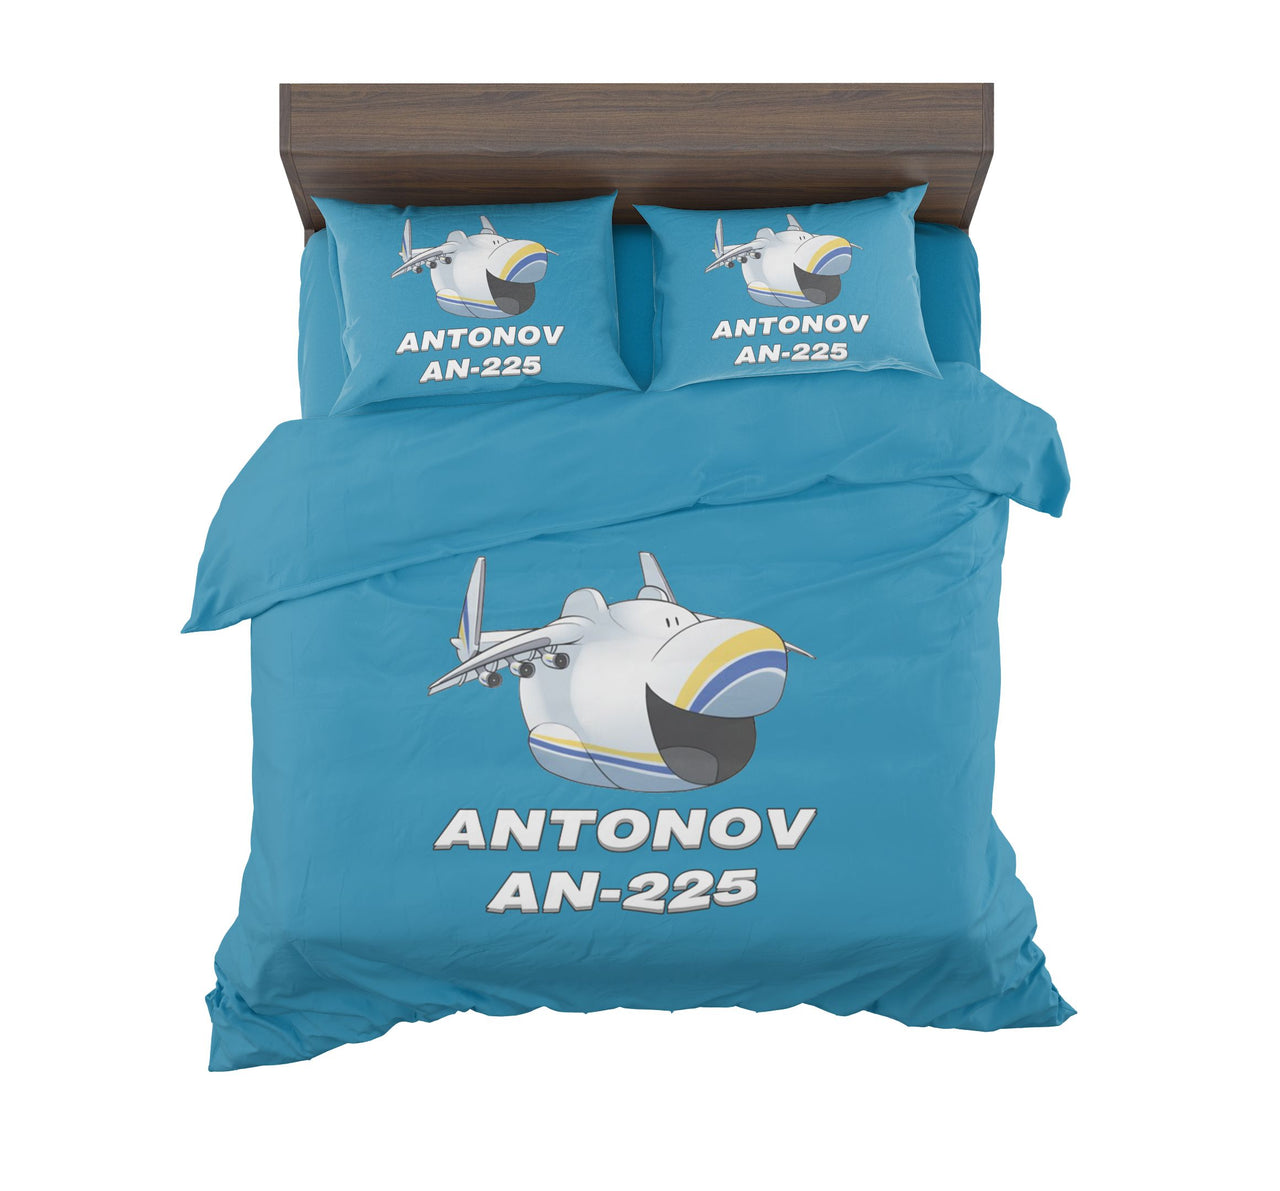 Antonov AN-225 (23) Designed Bedding Sets